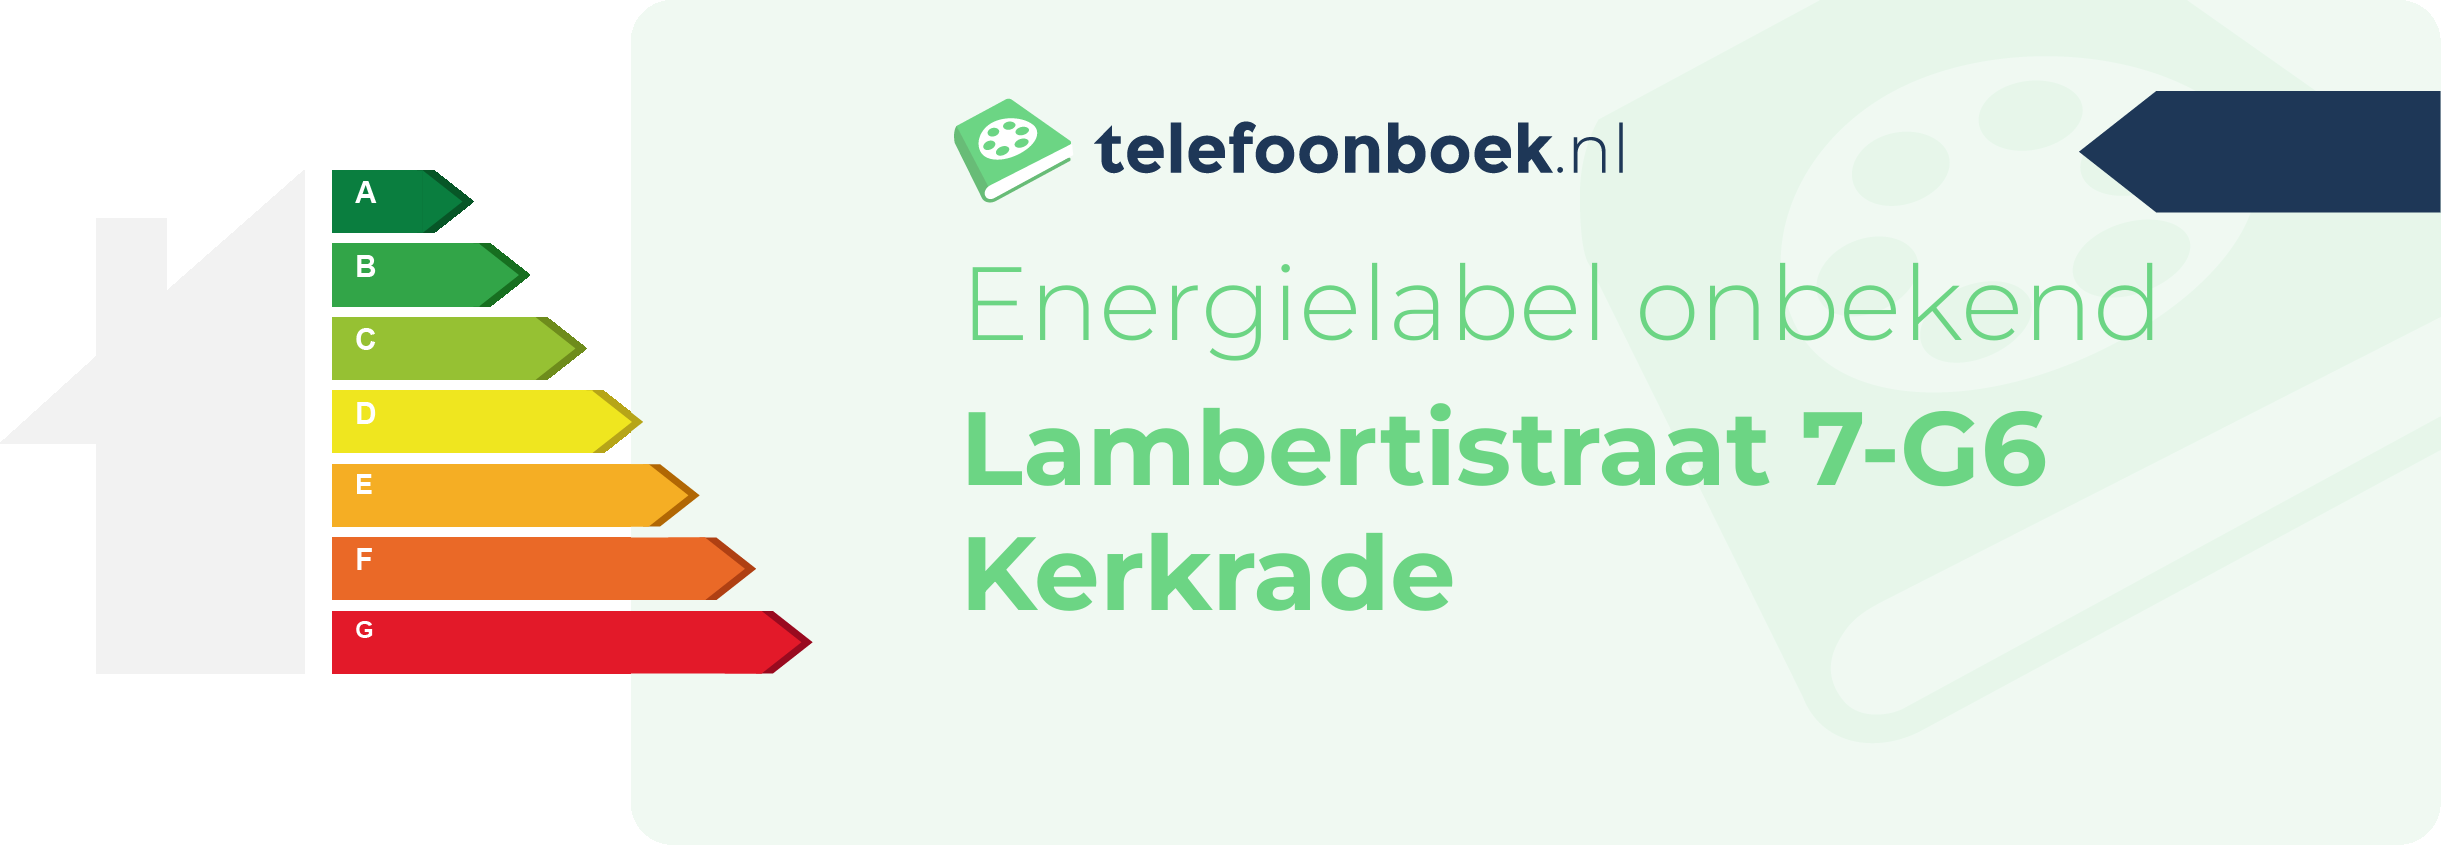 Energielabel Lambertistraat 7-G6 Kerkrade